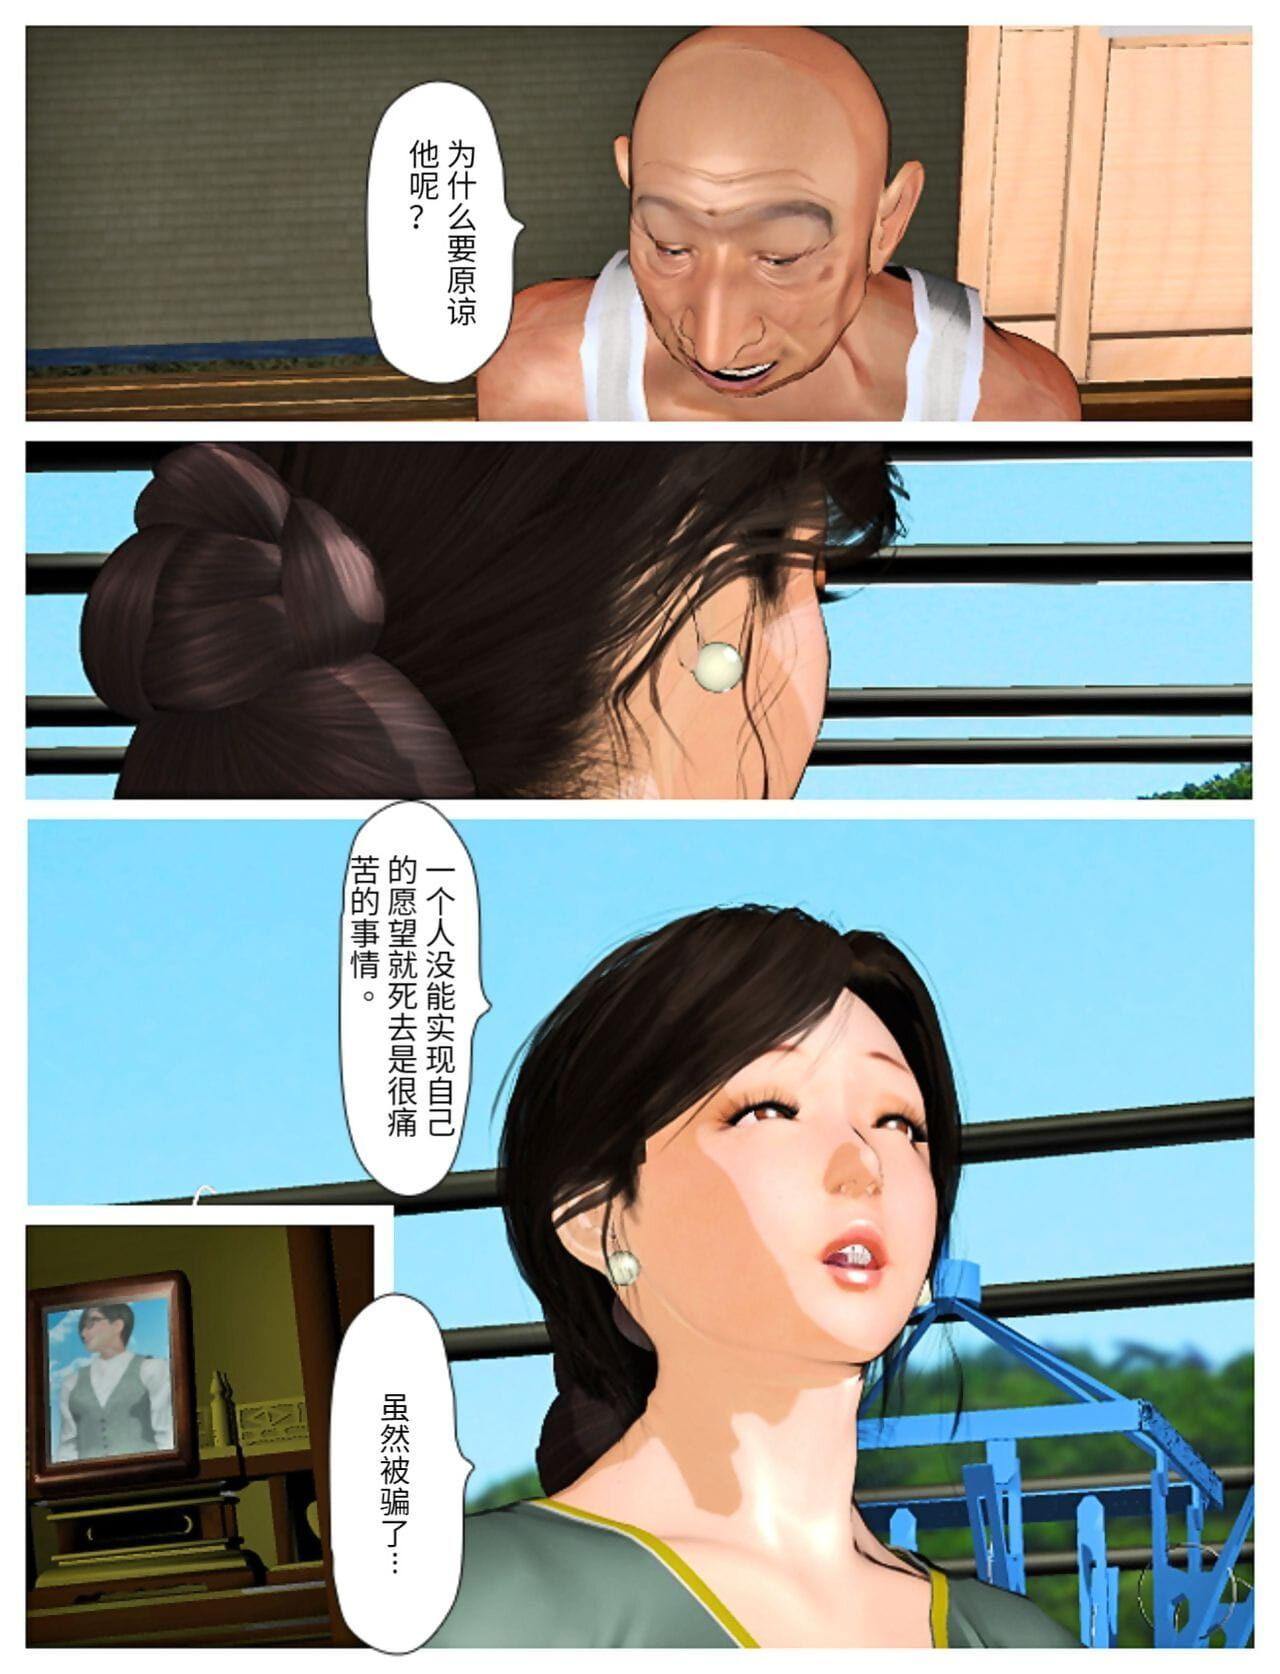 Kyou no misako San 2019:4 Parte 5 page 1